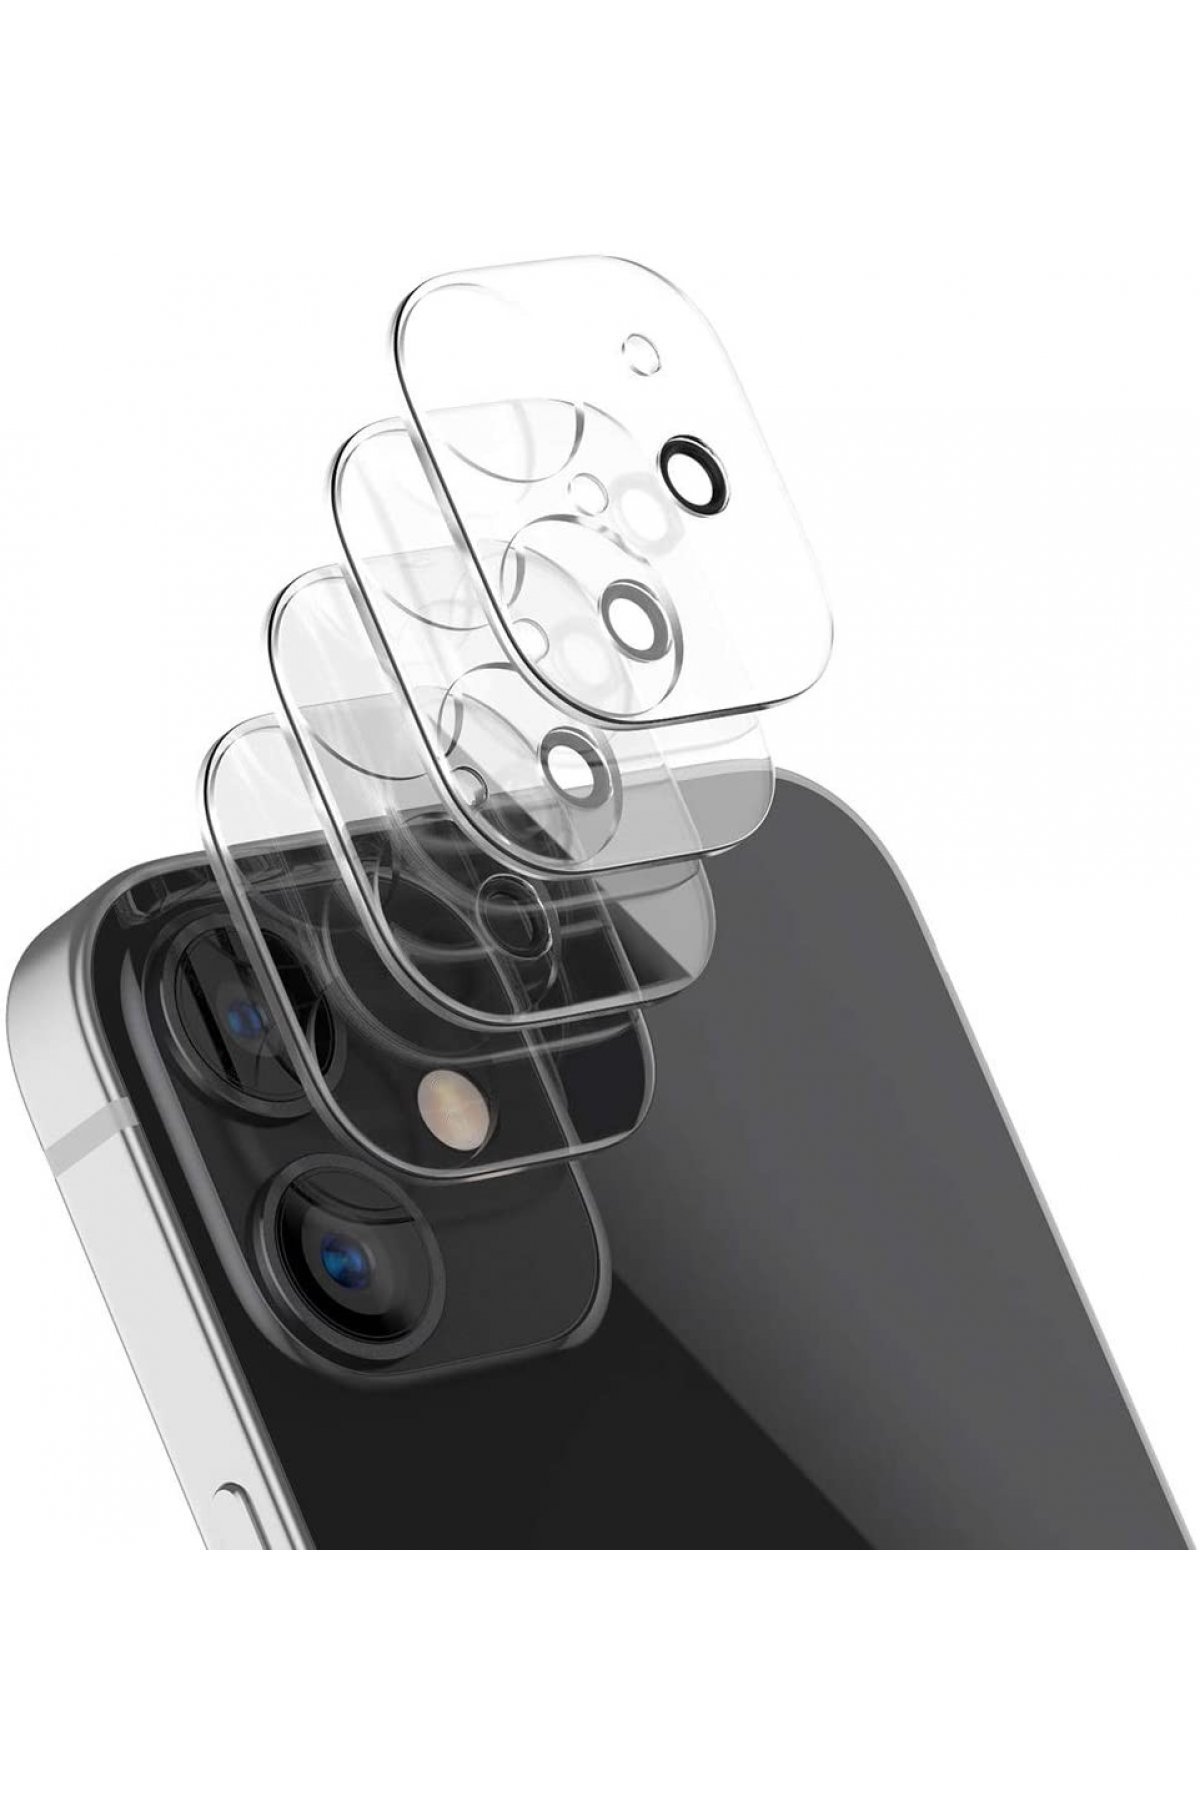 Newface iPhone 12 Pro Max Kılıf Elegant Kapak - Pudra